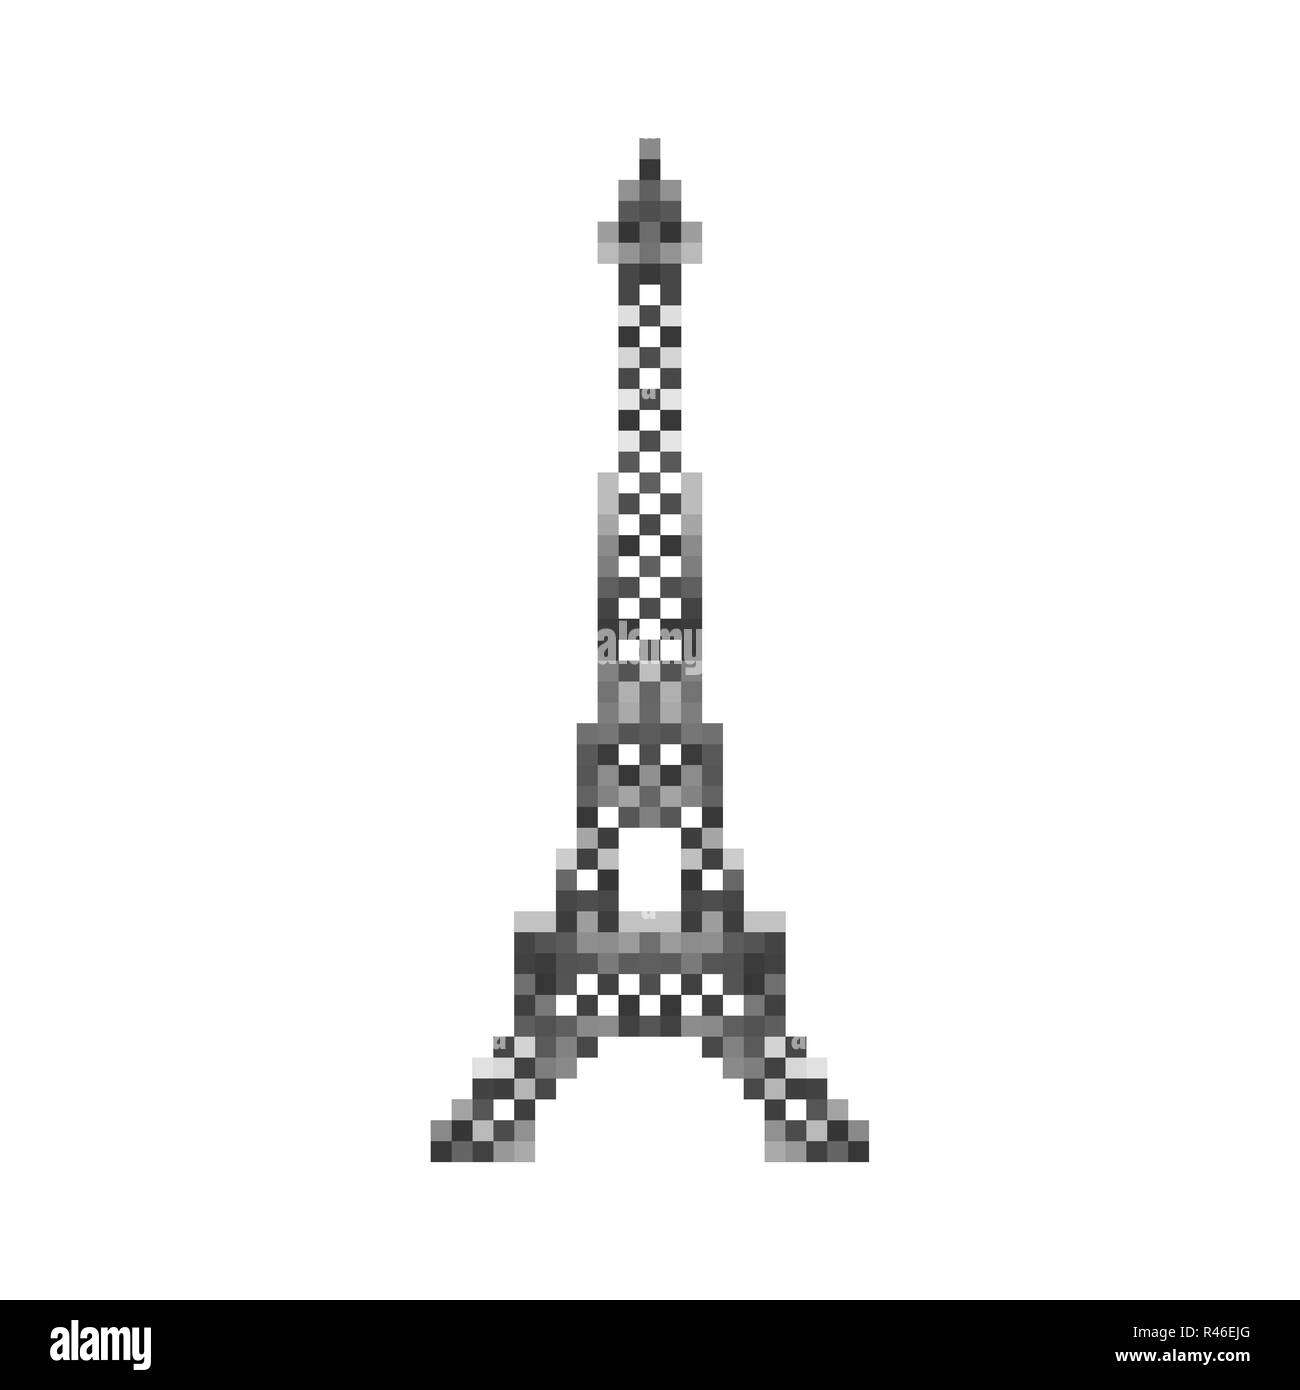 Eiffel Tower pixel art. Paris landmark 8 bit. France showplace Pixelate 16bit. Old game computer graphics style Stock Vector